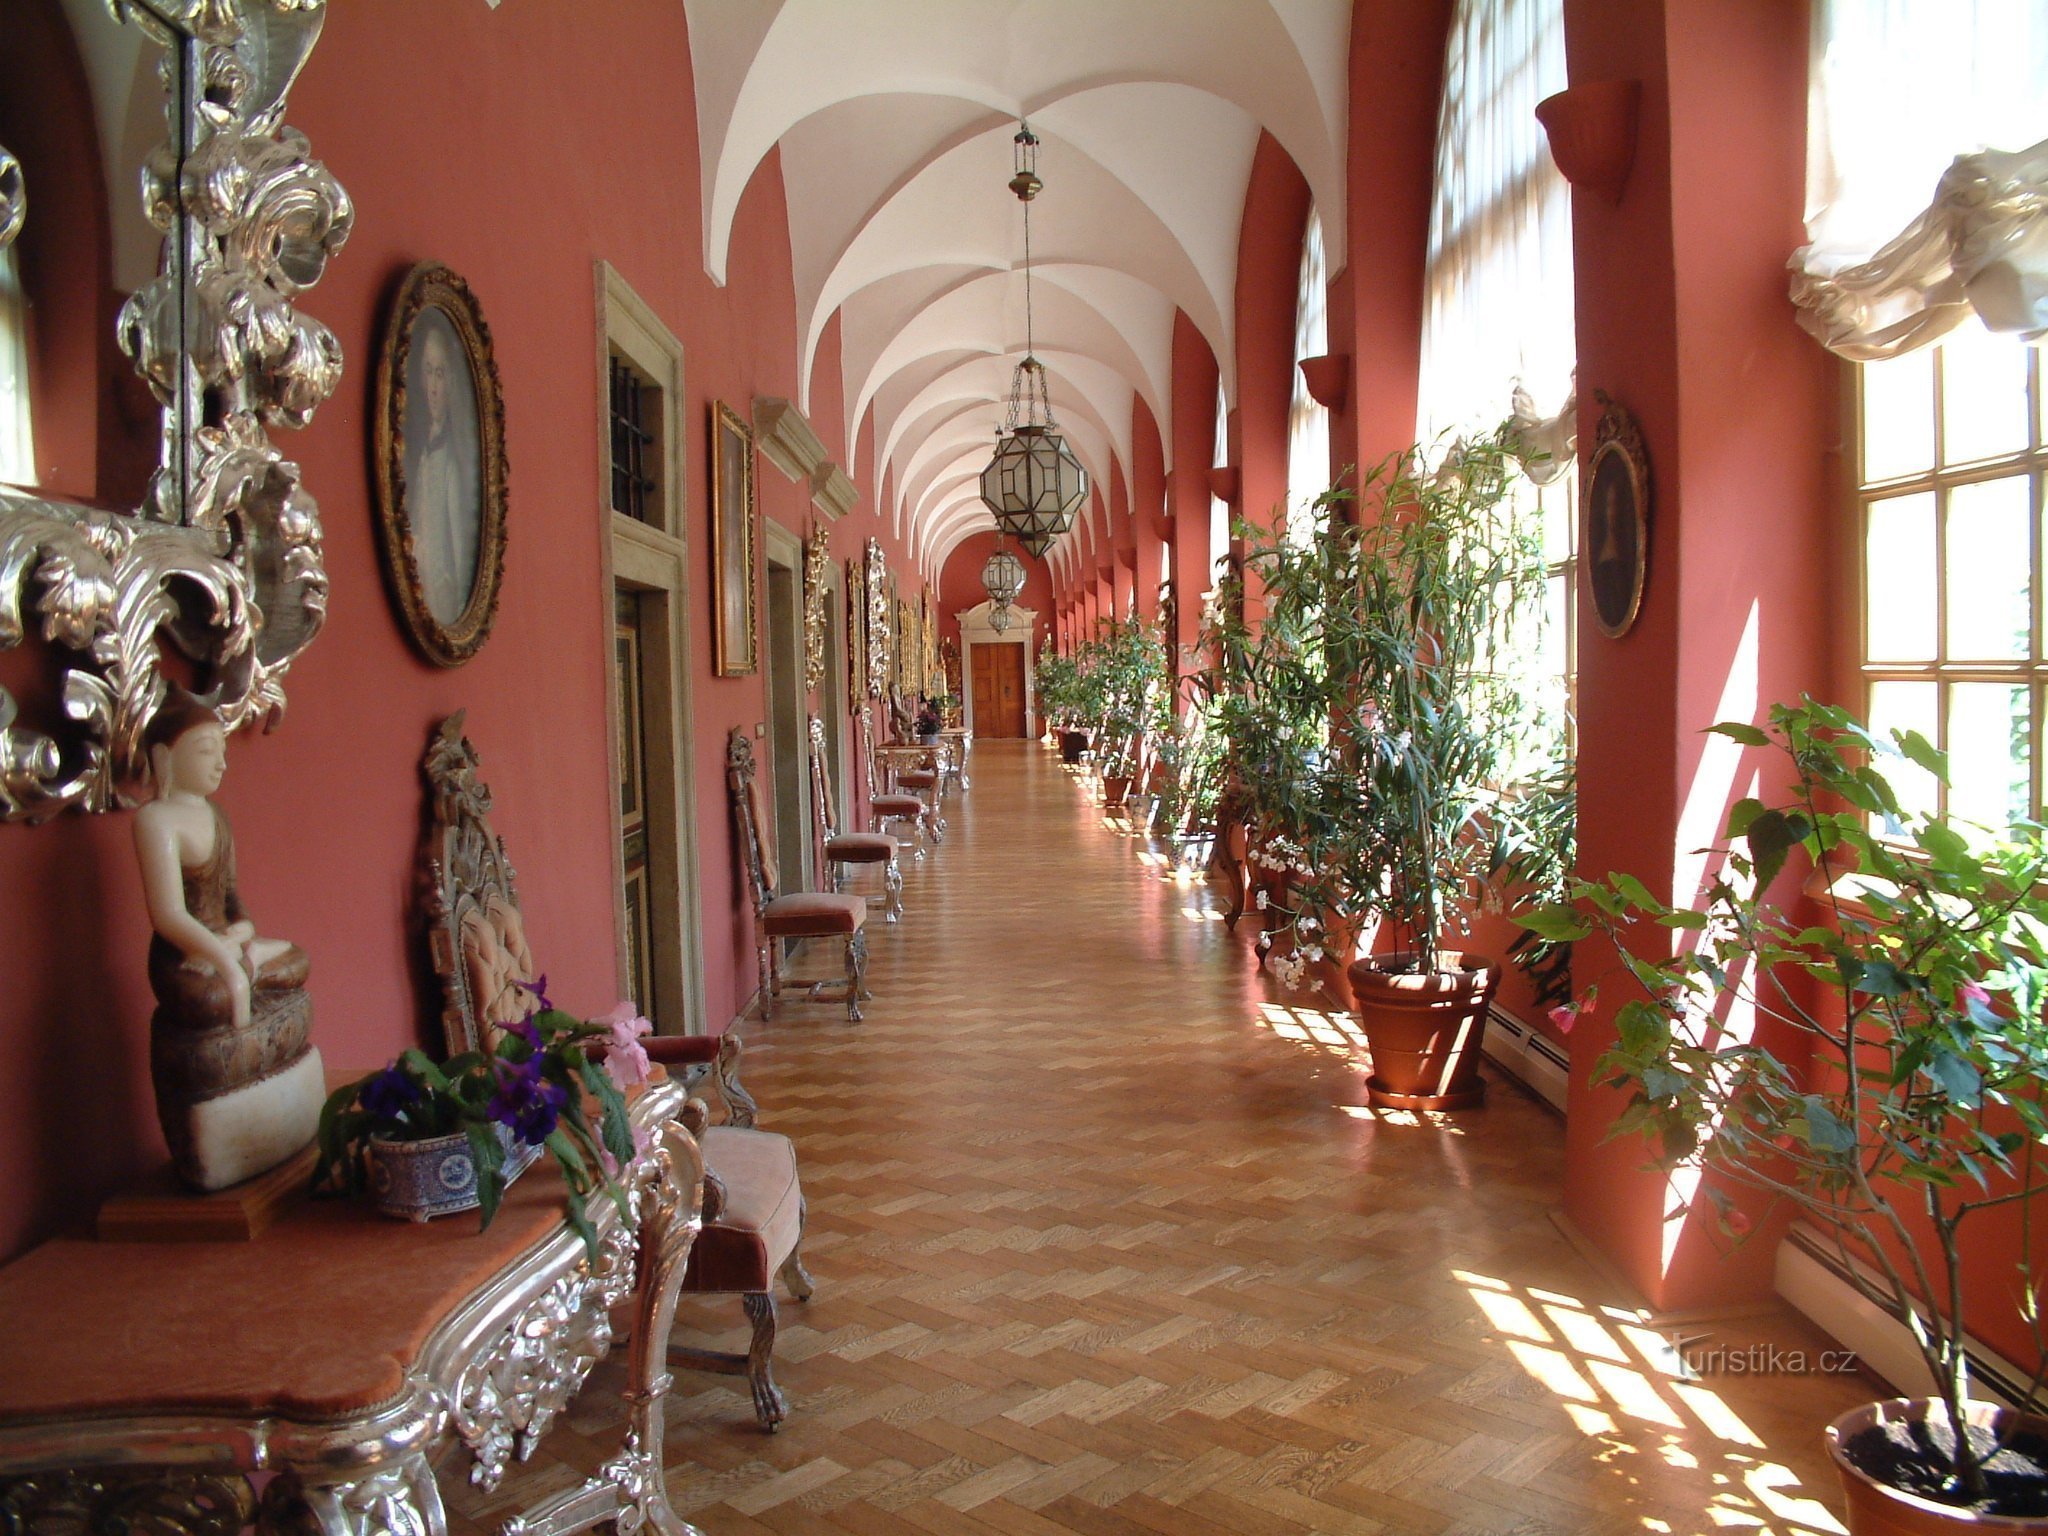 Аркадный коридор с цветами.